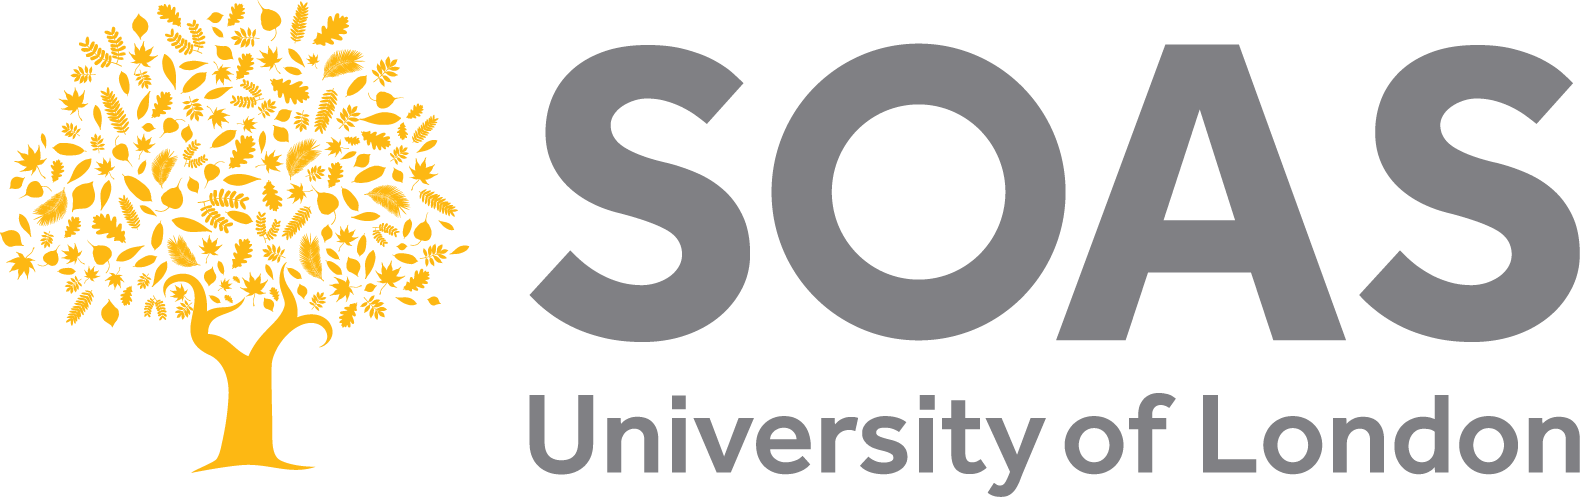 Image of SOAS logo colour on transparent